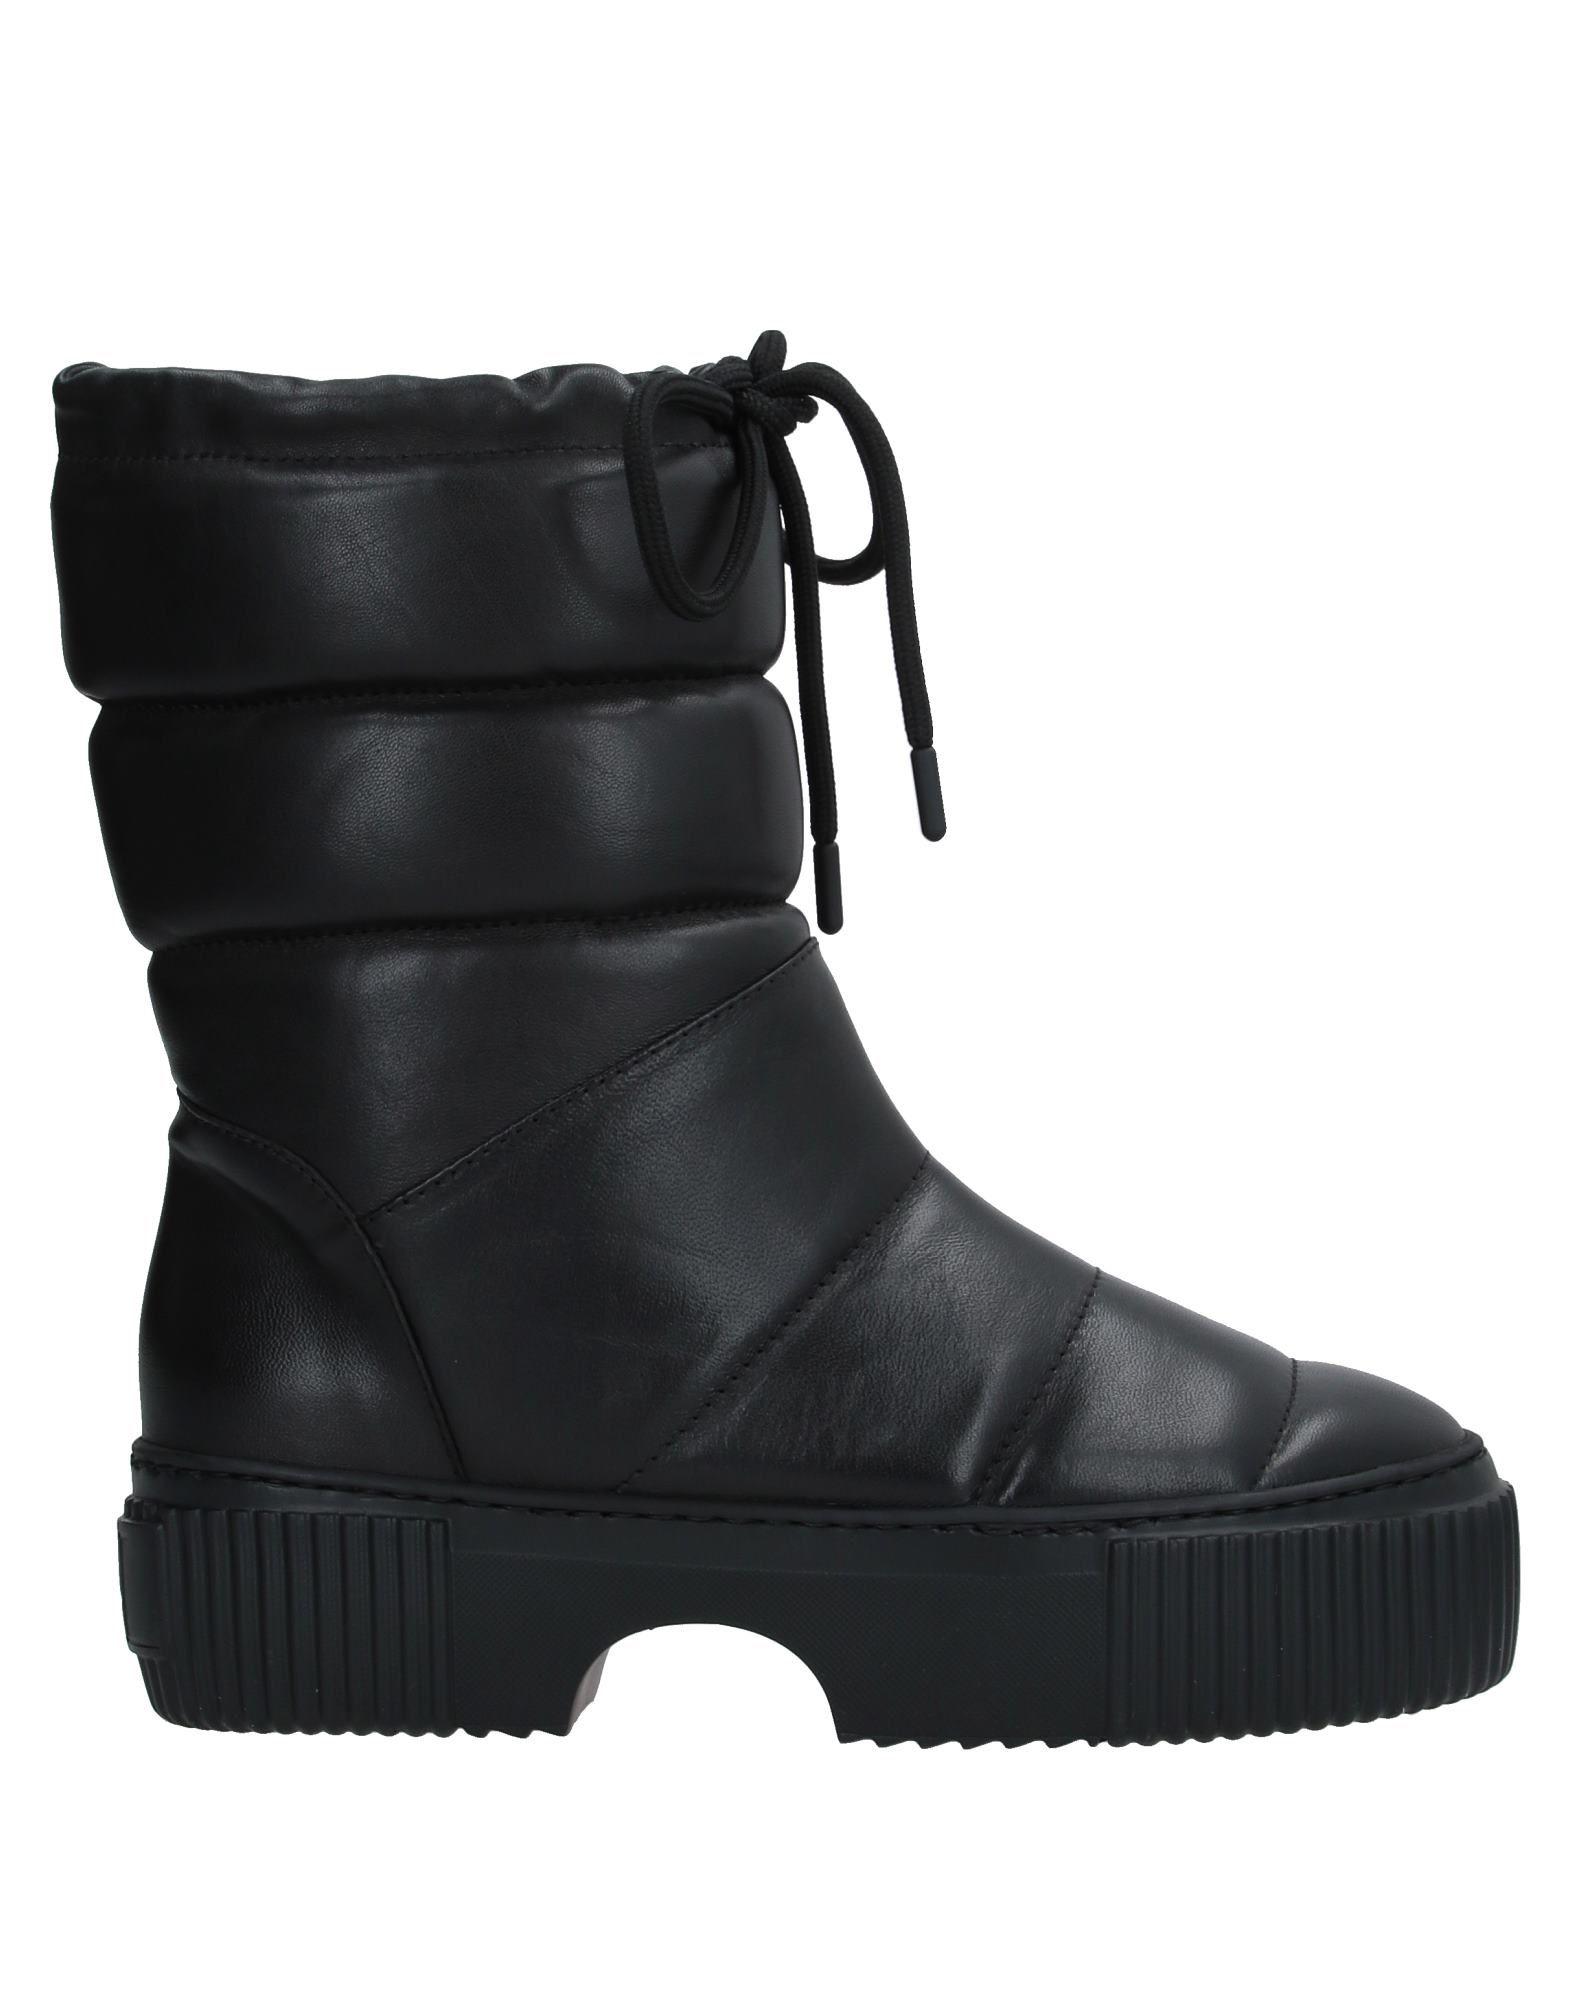 Agl Attilio Giusti Leombruni Leather Ankle Boots in Black - Lyst